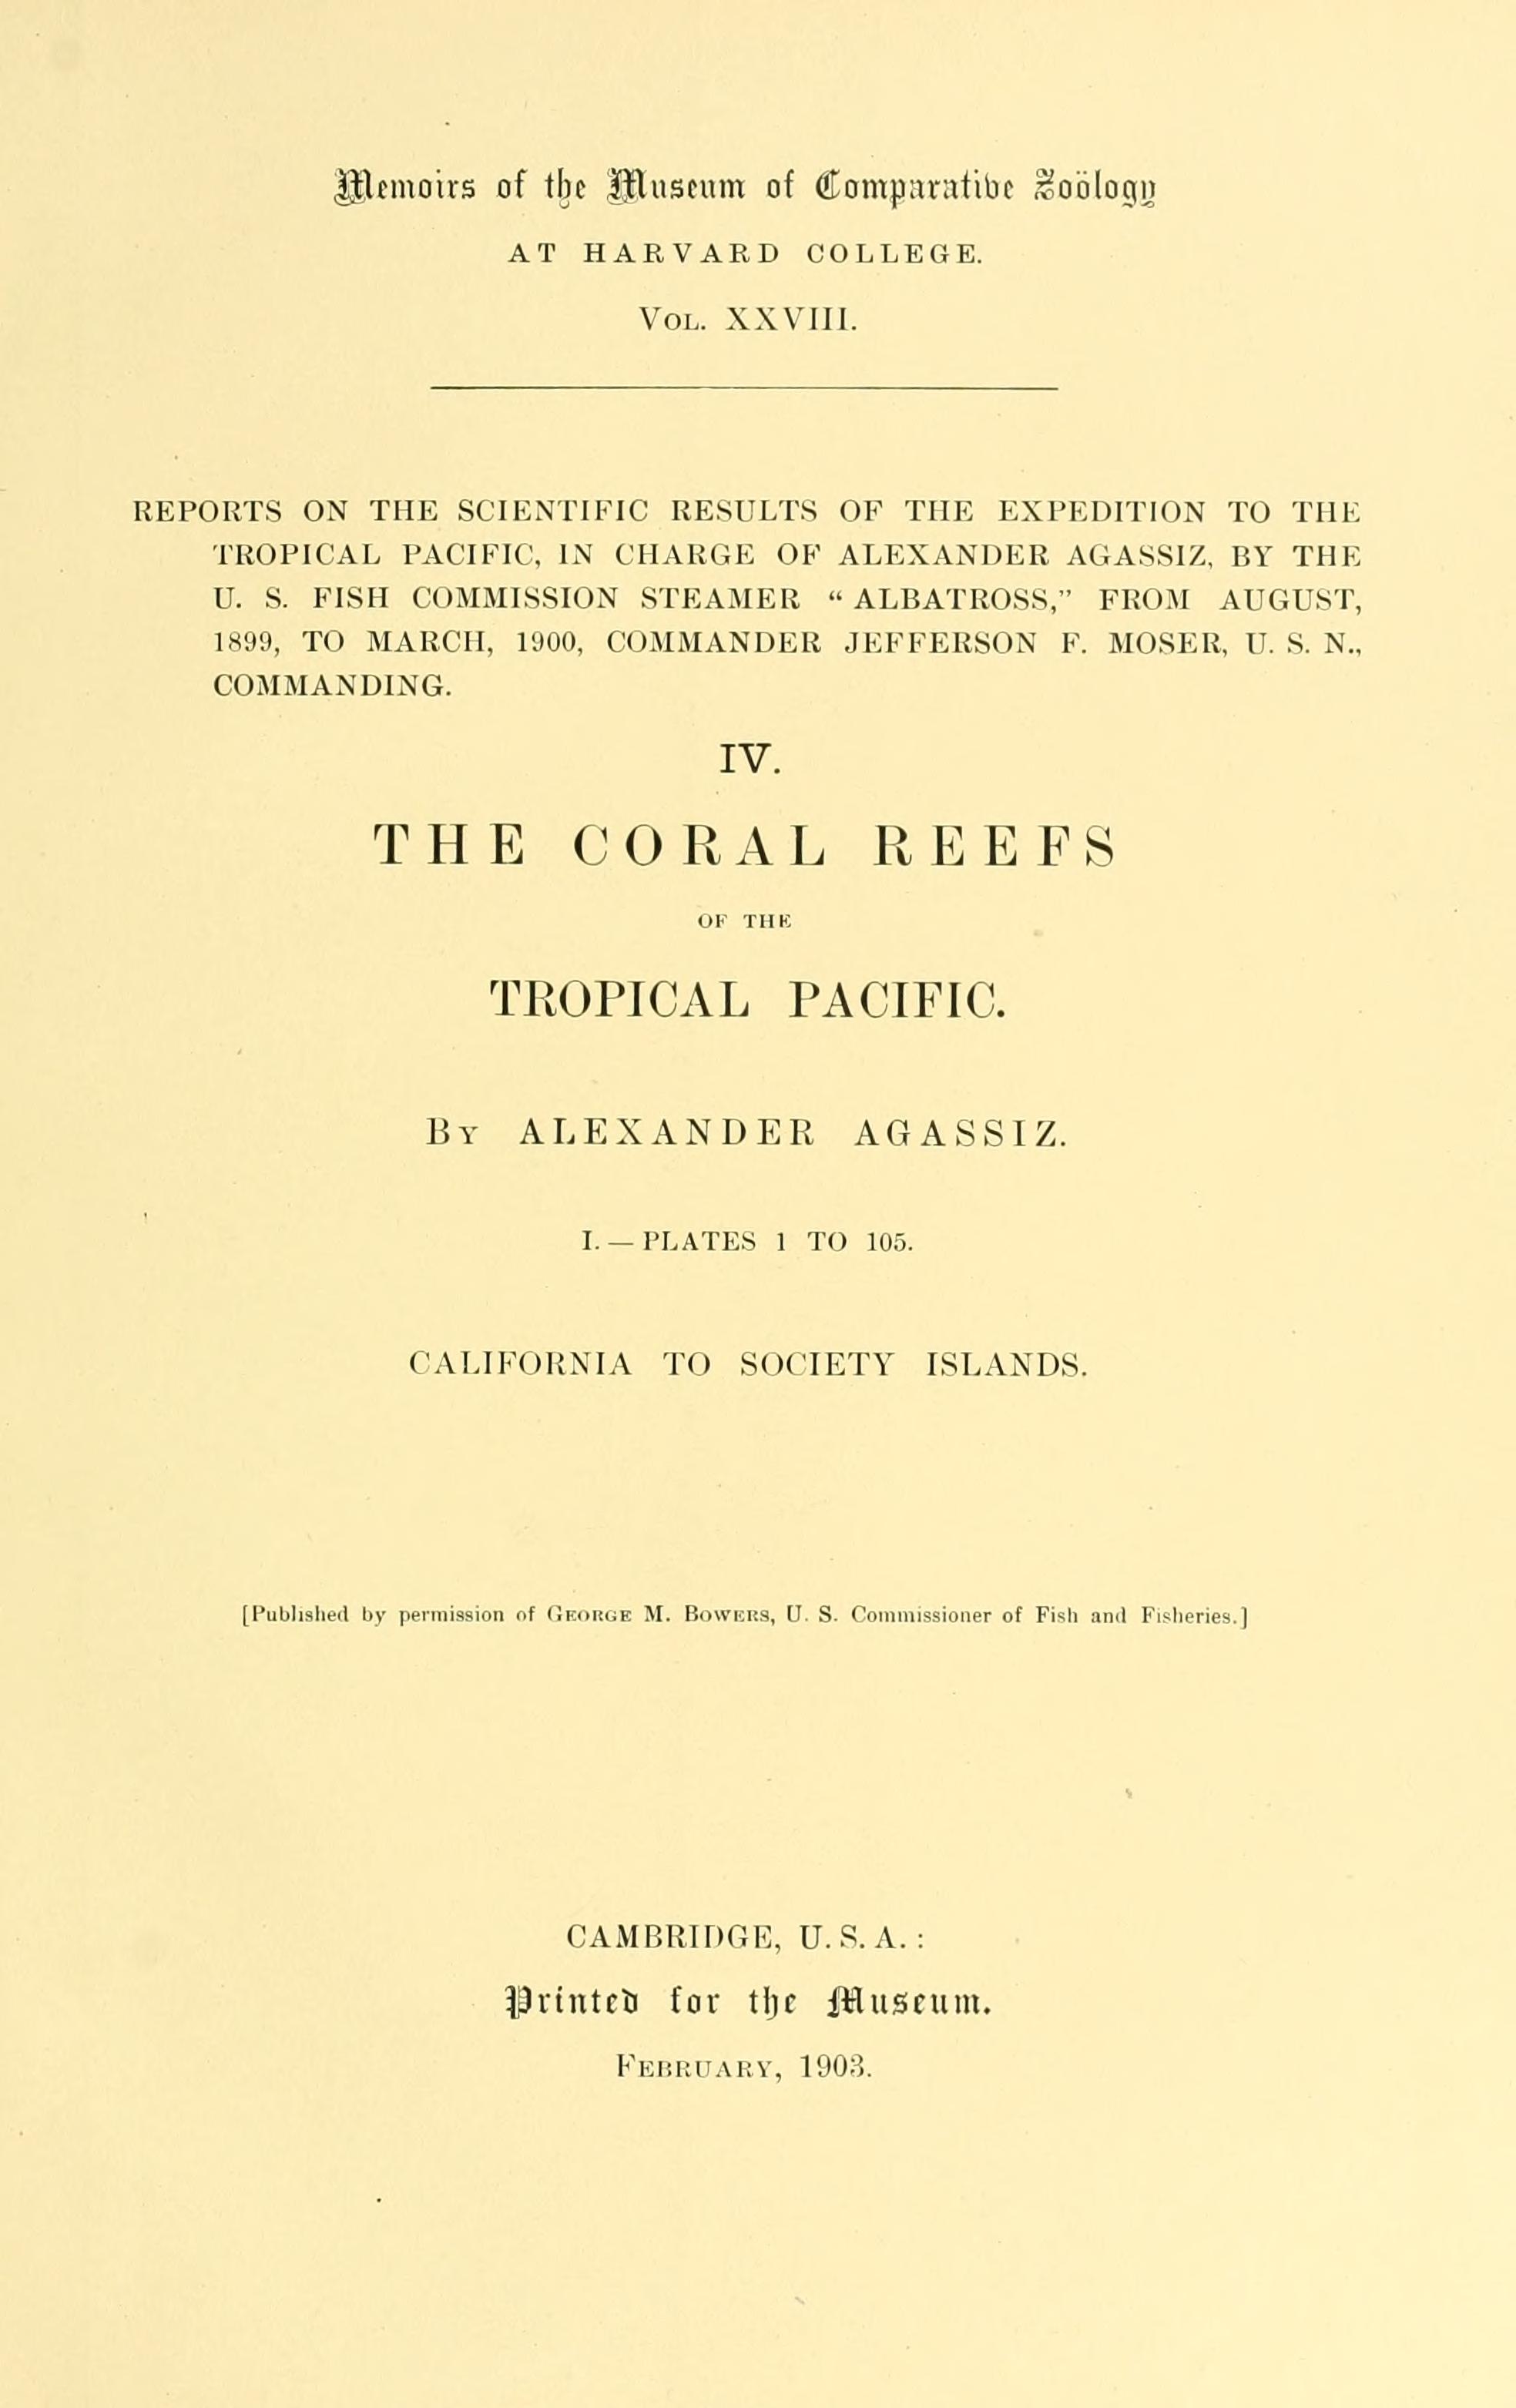 MCZ Memoirs Vol. XXVIII [I. Plates 1-105, California to Society Islands]